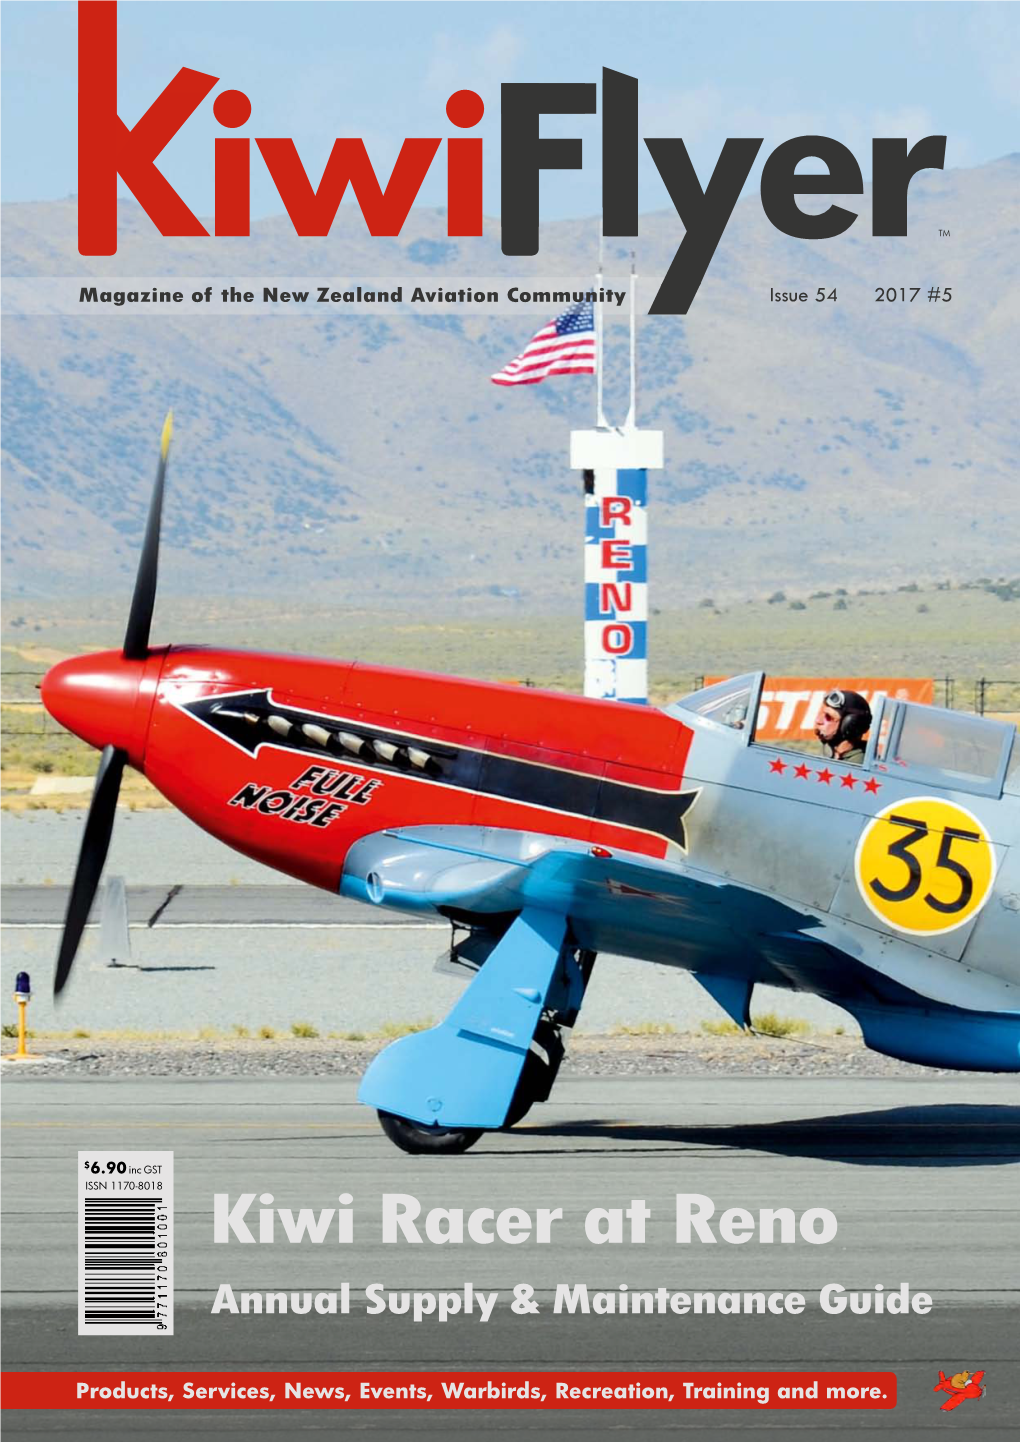 Kiwi Racer at Reno Annual Supply & Maintenance Guide